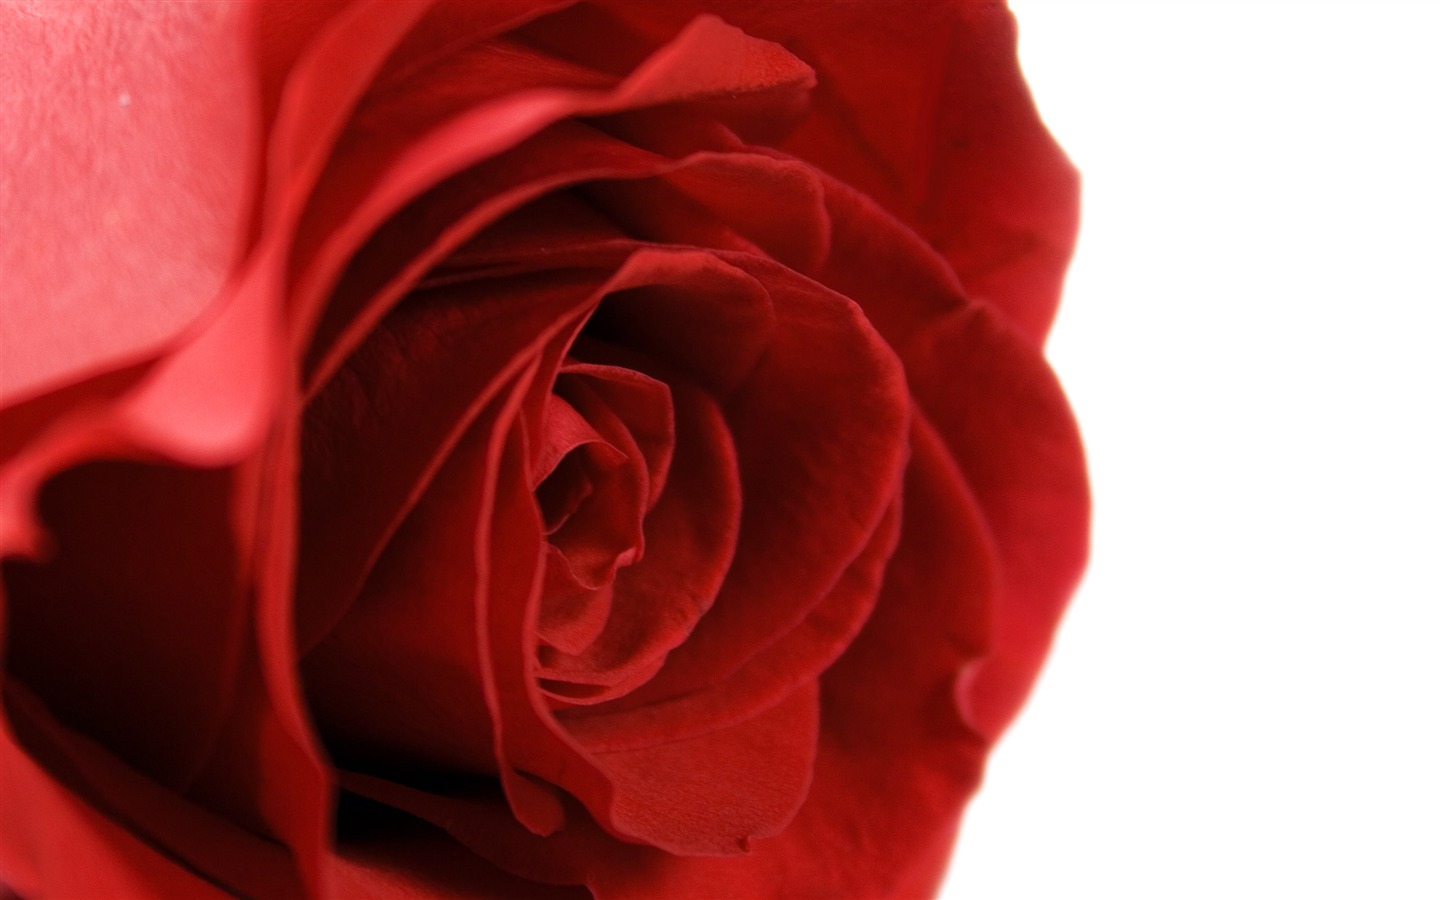 Gran Rose Fondos de fotos (5) #15 - 1440x900